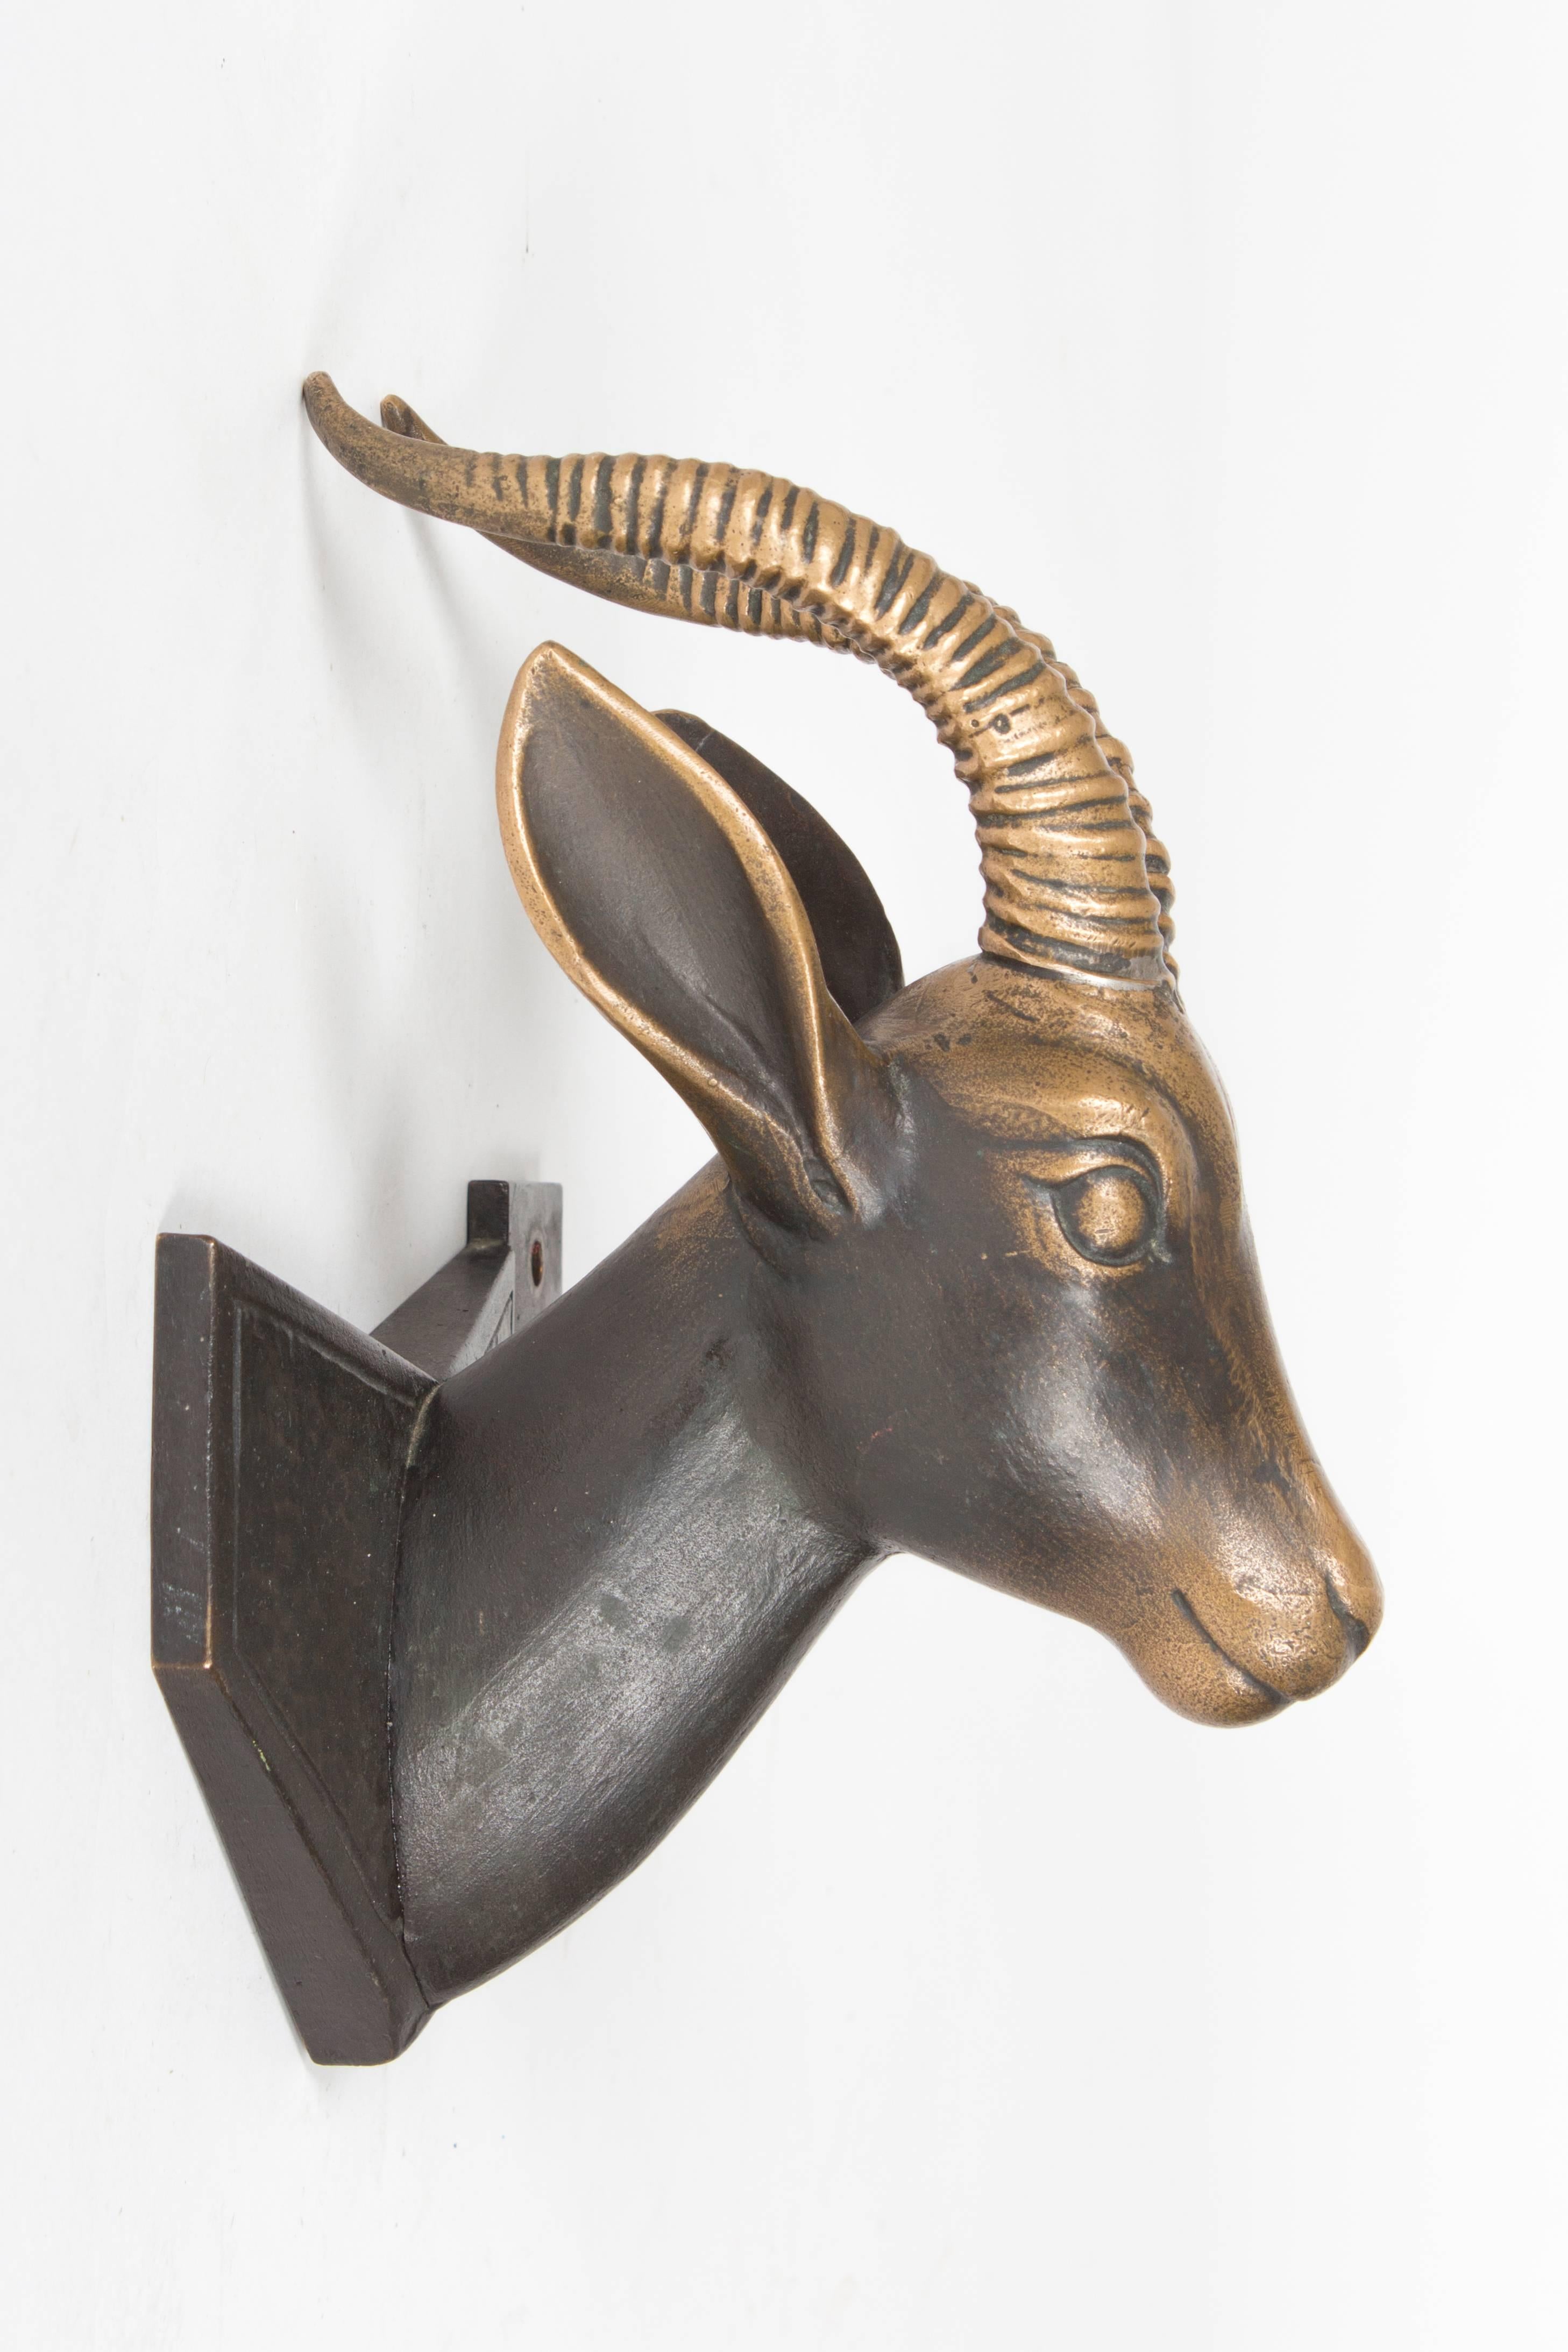 Austrian Massive Brass Door Handle Depicting a Gazelle by the Hagenauer Workshop Vienna For Sale